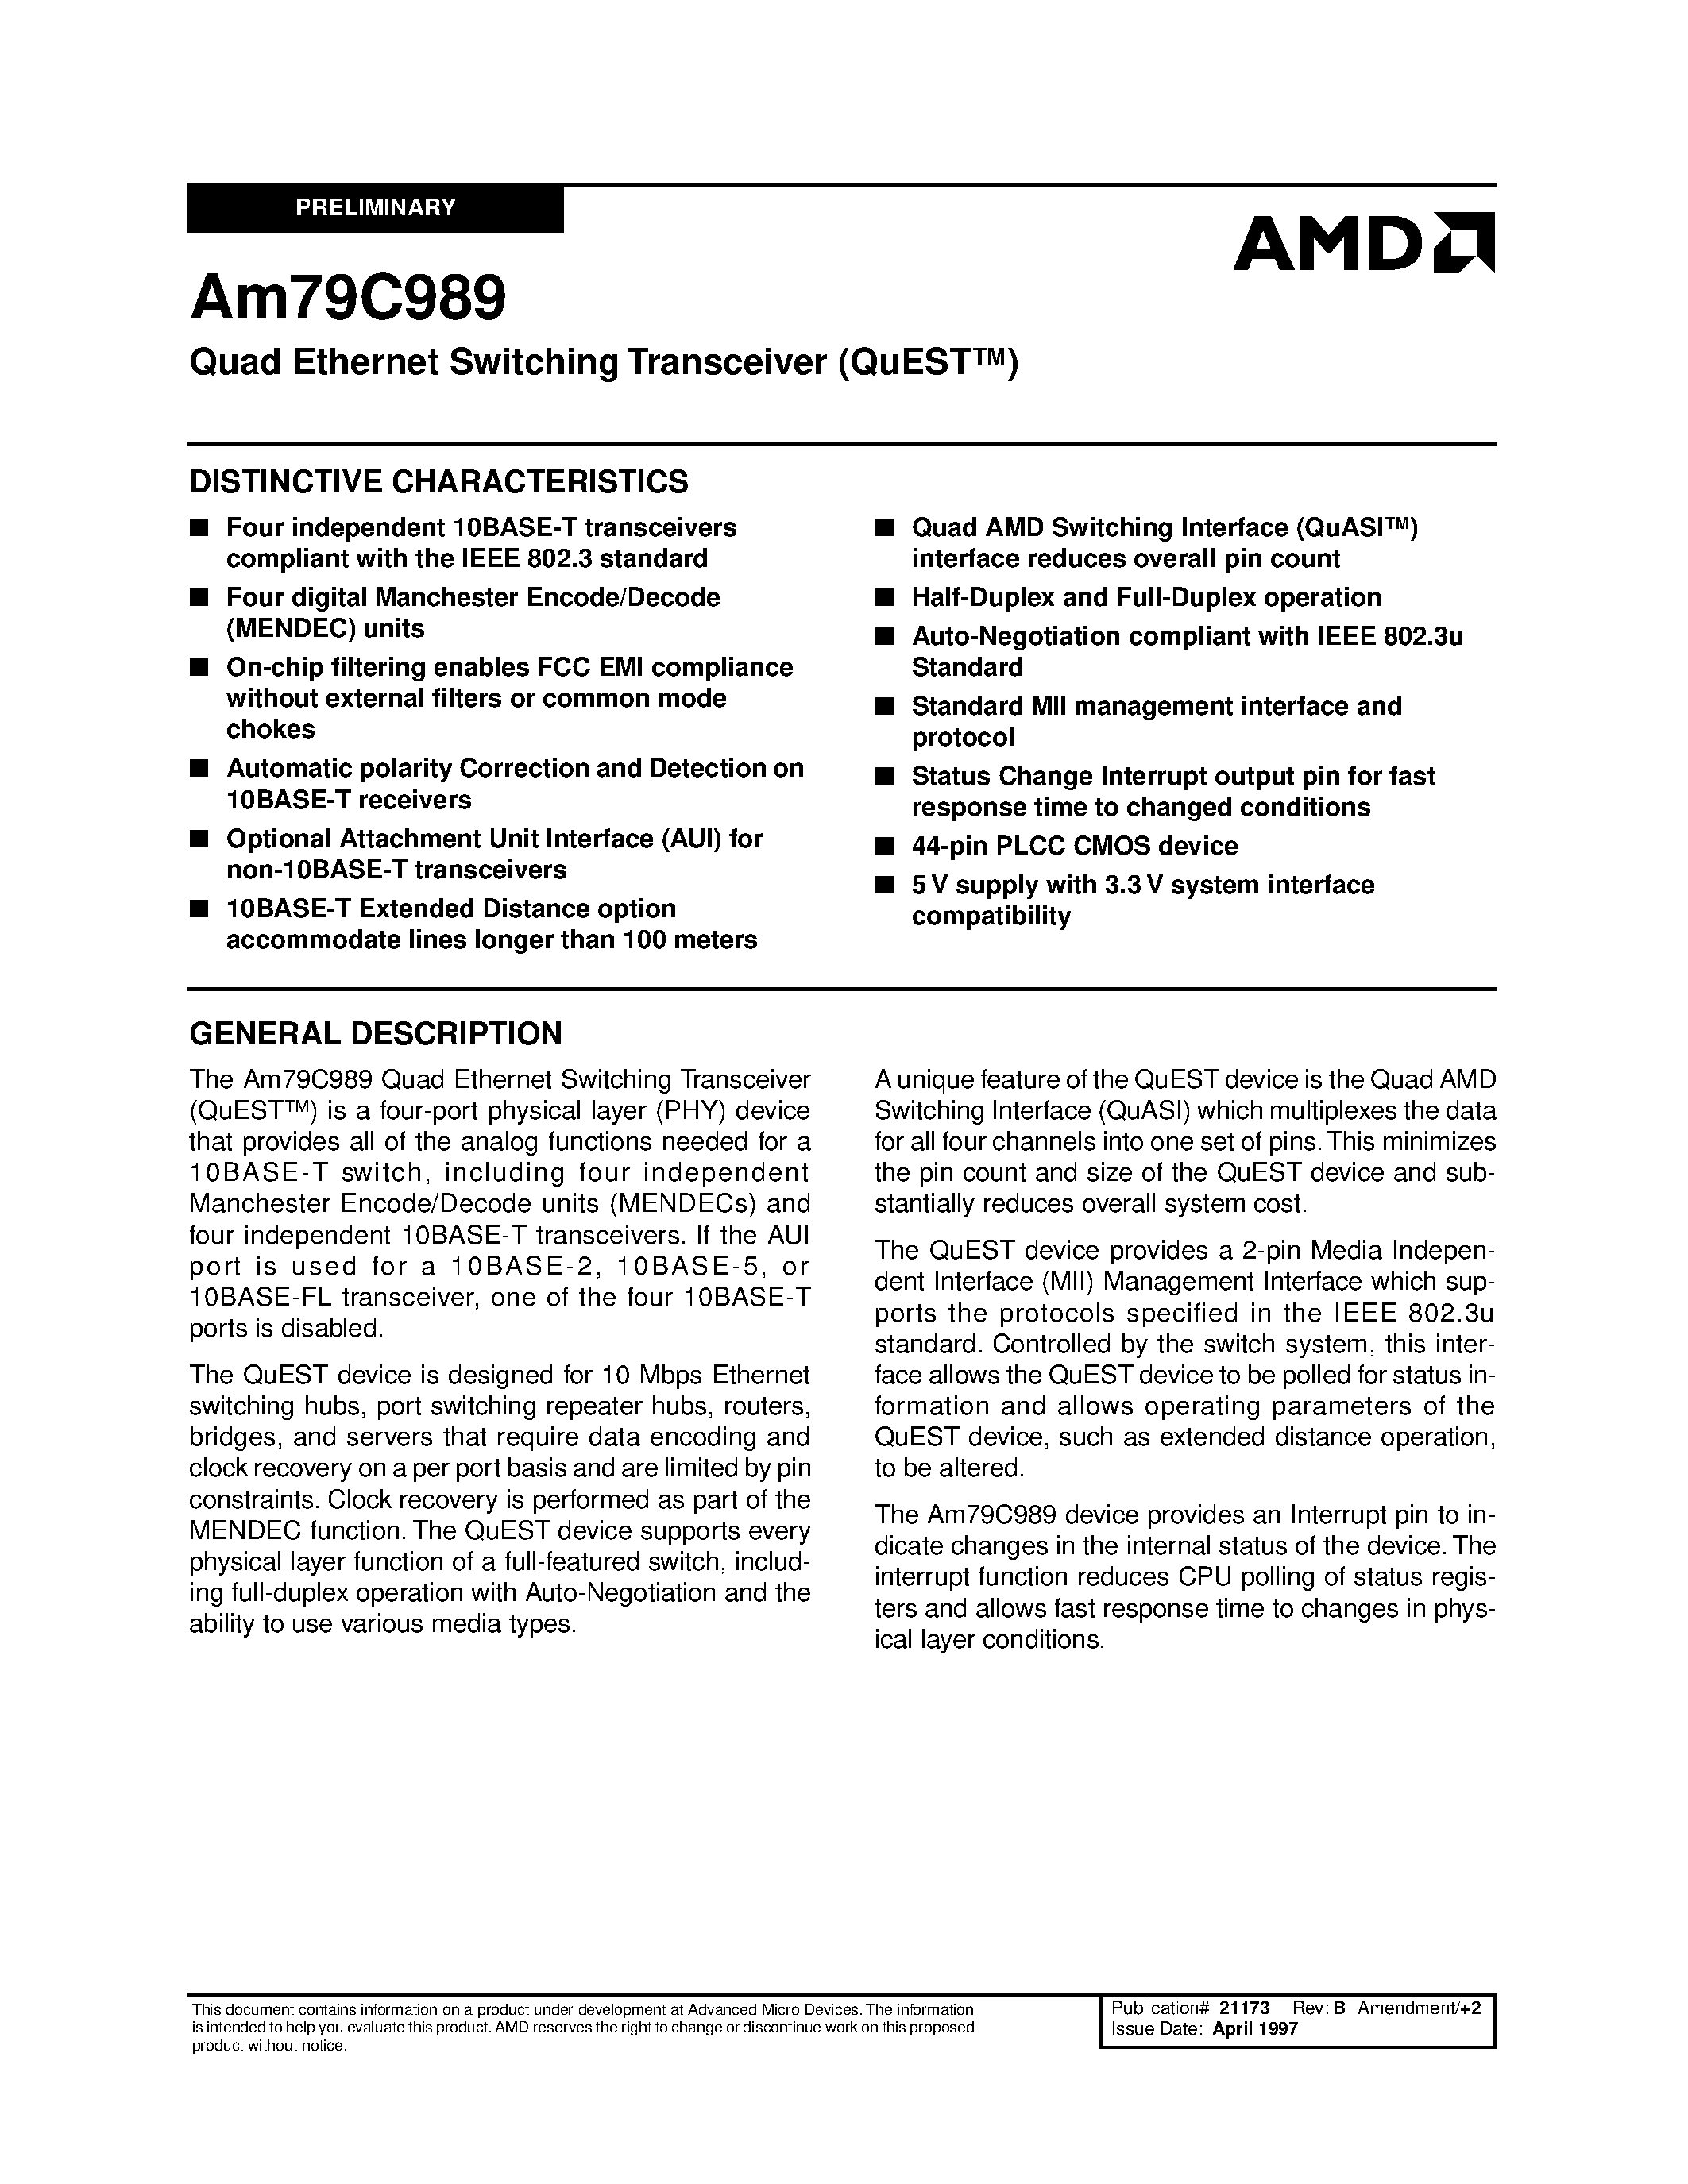 Даташит Am79C989JC - Quad Ethernet Switching Transceiver (QuEST) страница 1